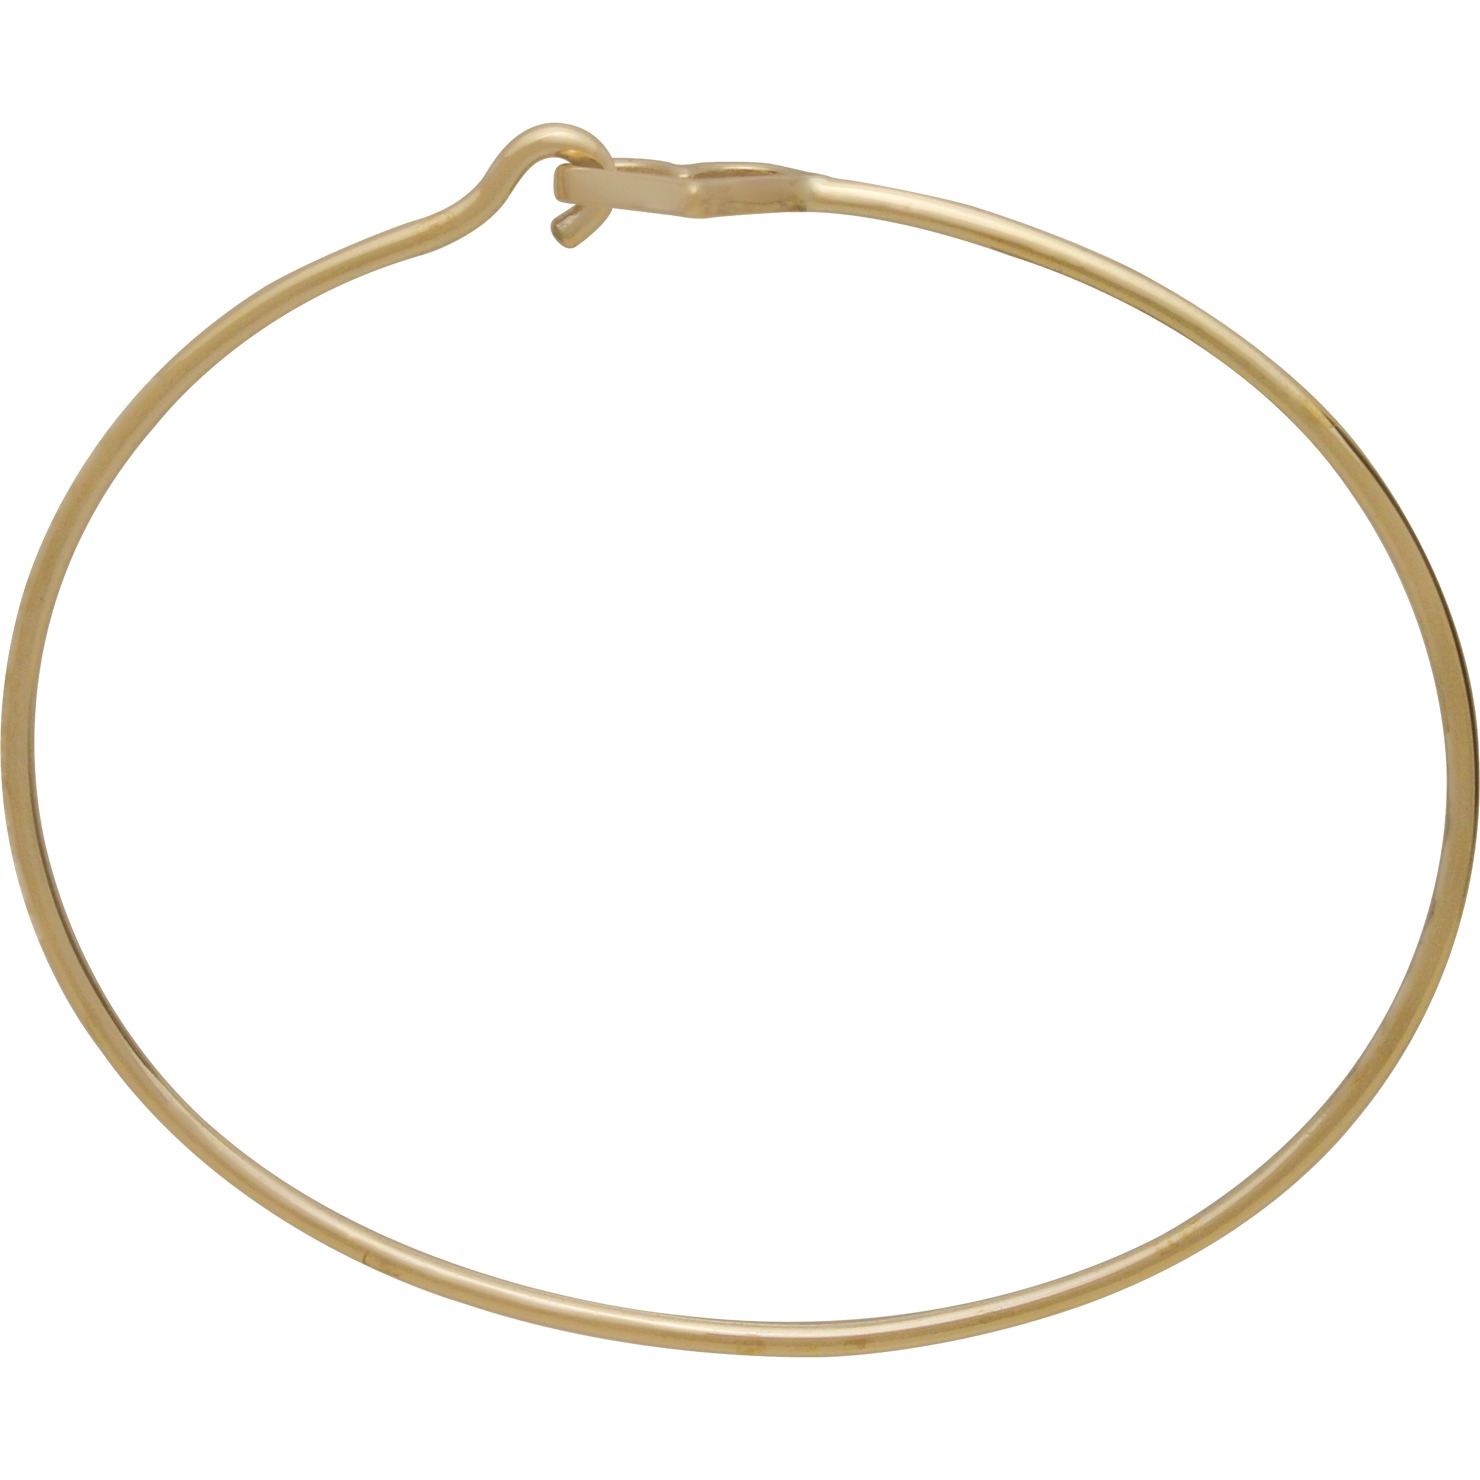 Bronze Charm Bracelet - Heart Hook and Eye Closure